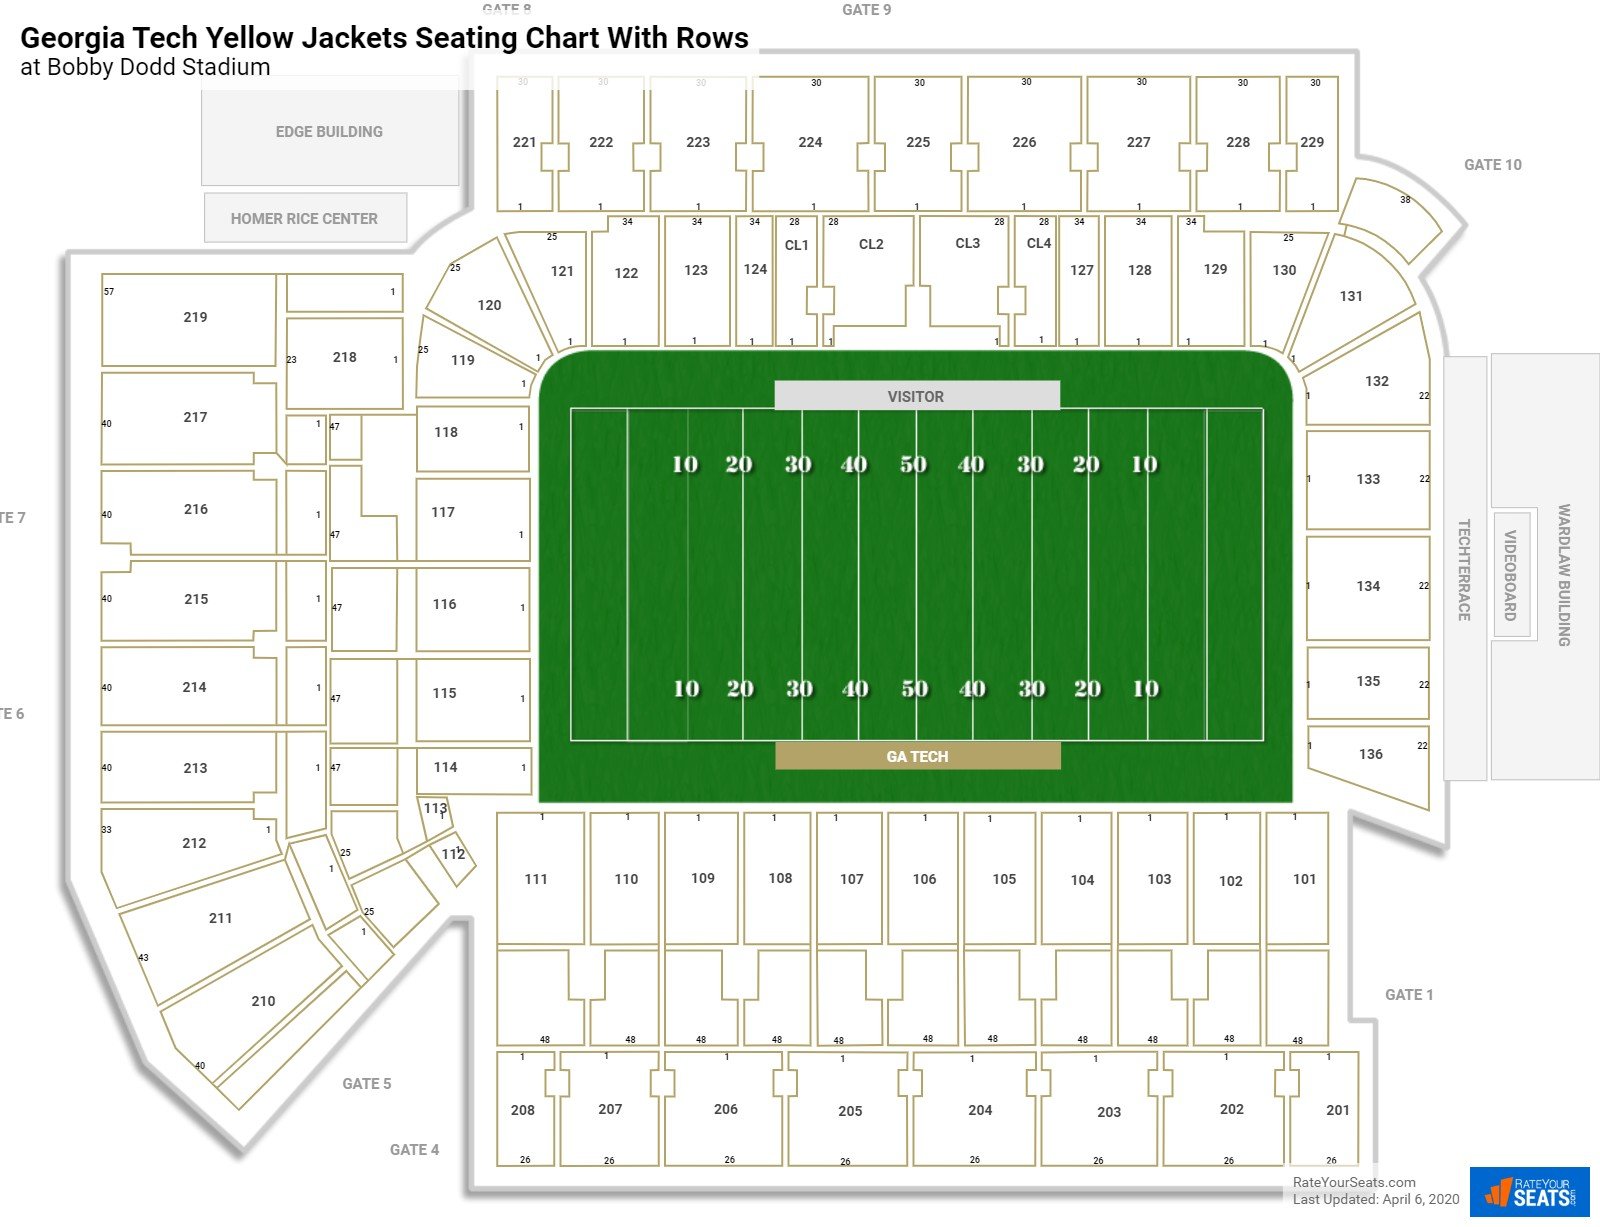 Bobby Dodd Stadium Seating Chart - RateYourSeats.com